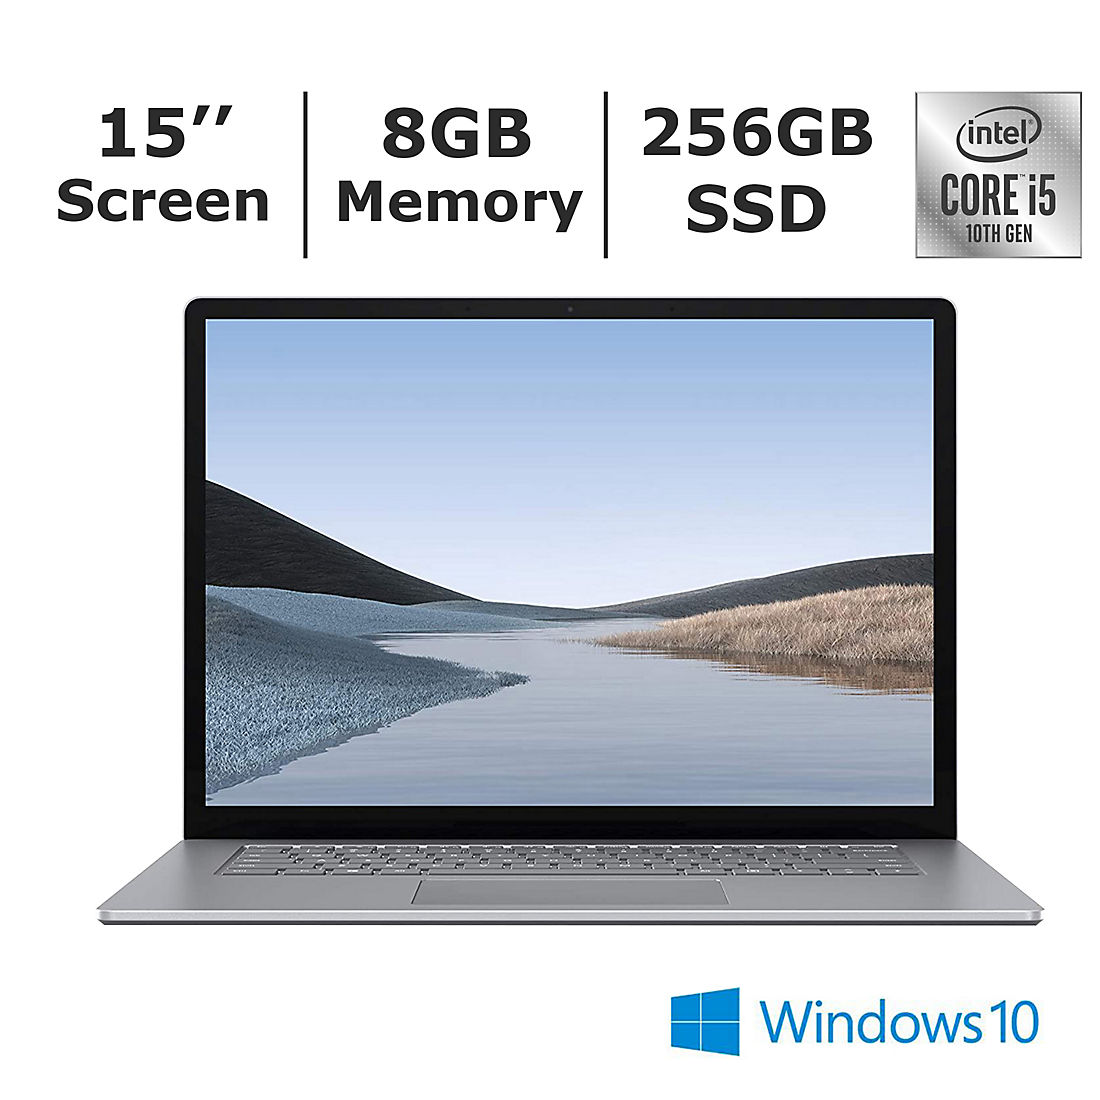 Microsoft Surface Laptop 3, Intel Core i5 Processor. 8GB Memory, 256GB SSD